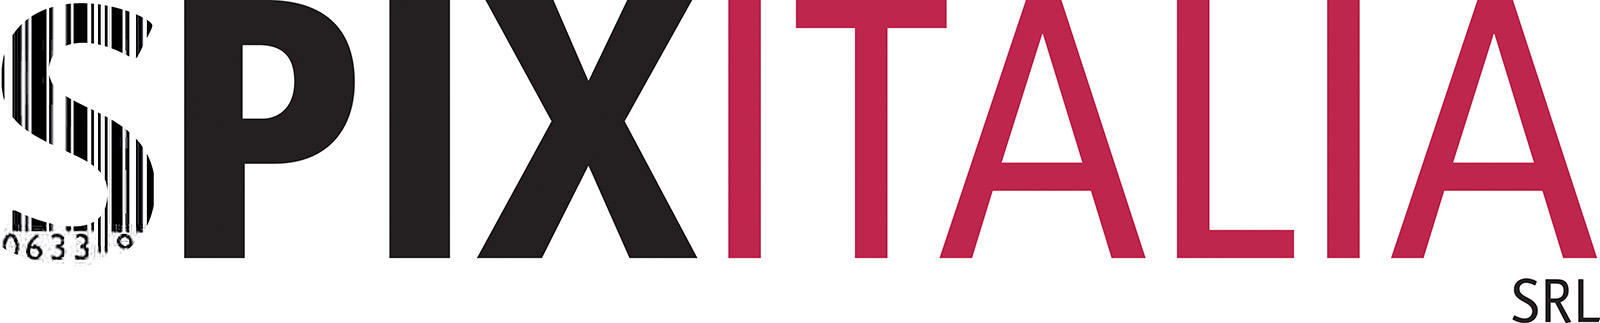 logo spix italia (1)